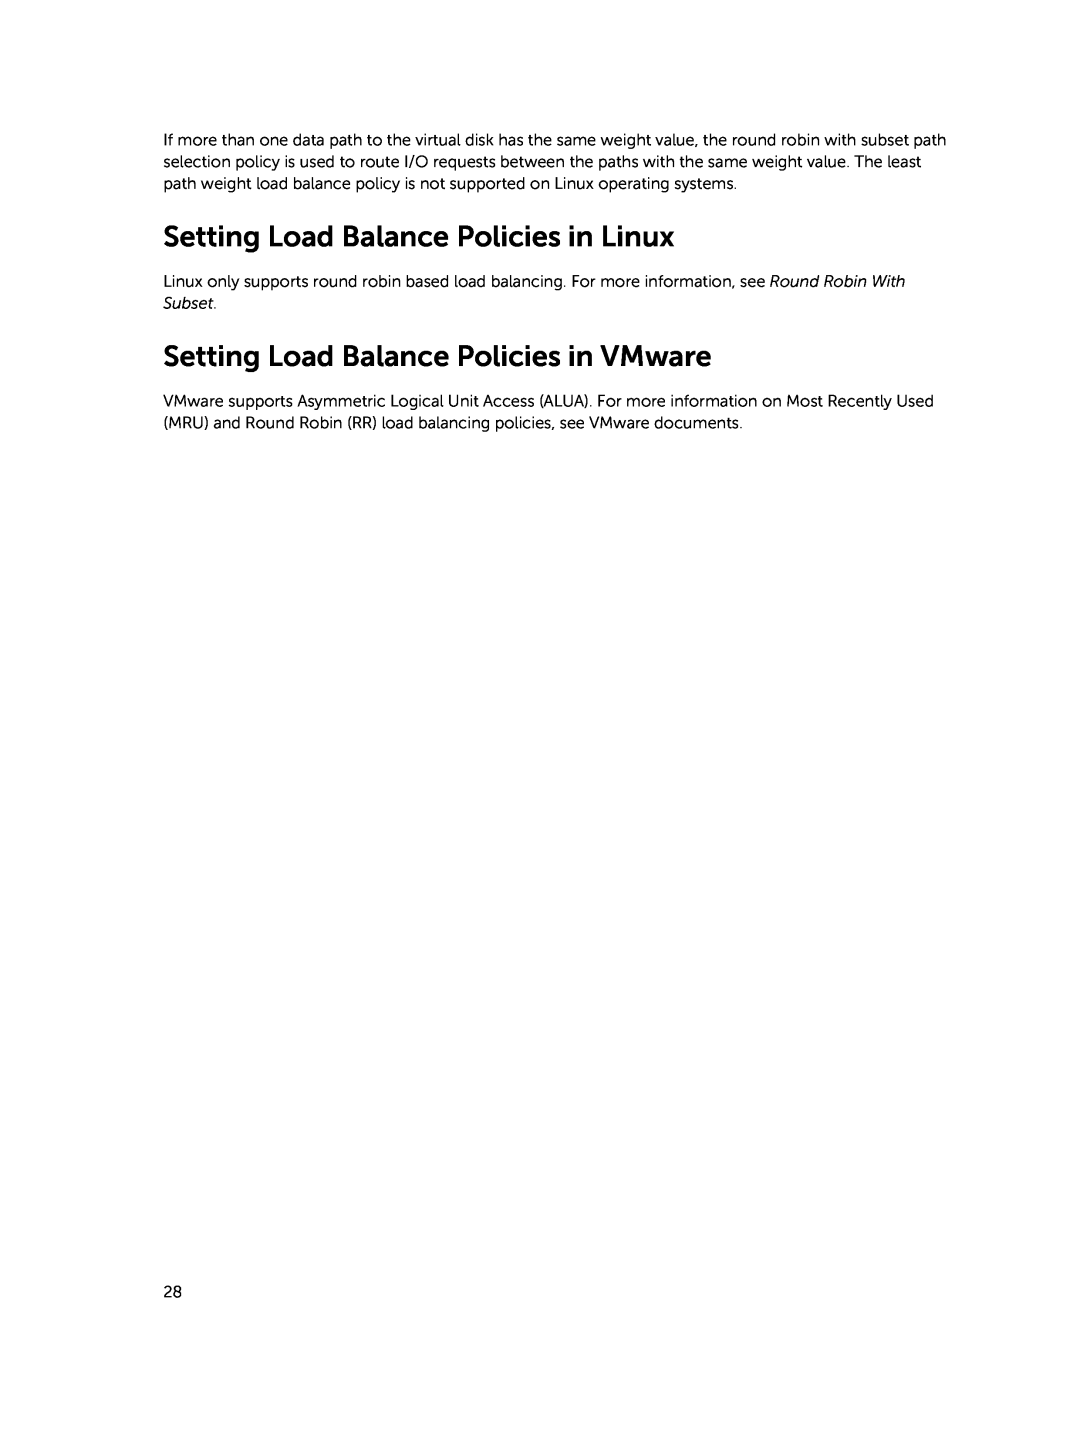 Dell MD3460 manual Setting Load Balance Policies in Linux, Setting Load Balance Policies in VMware 